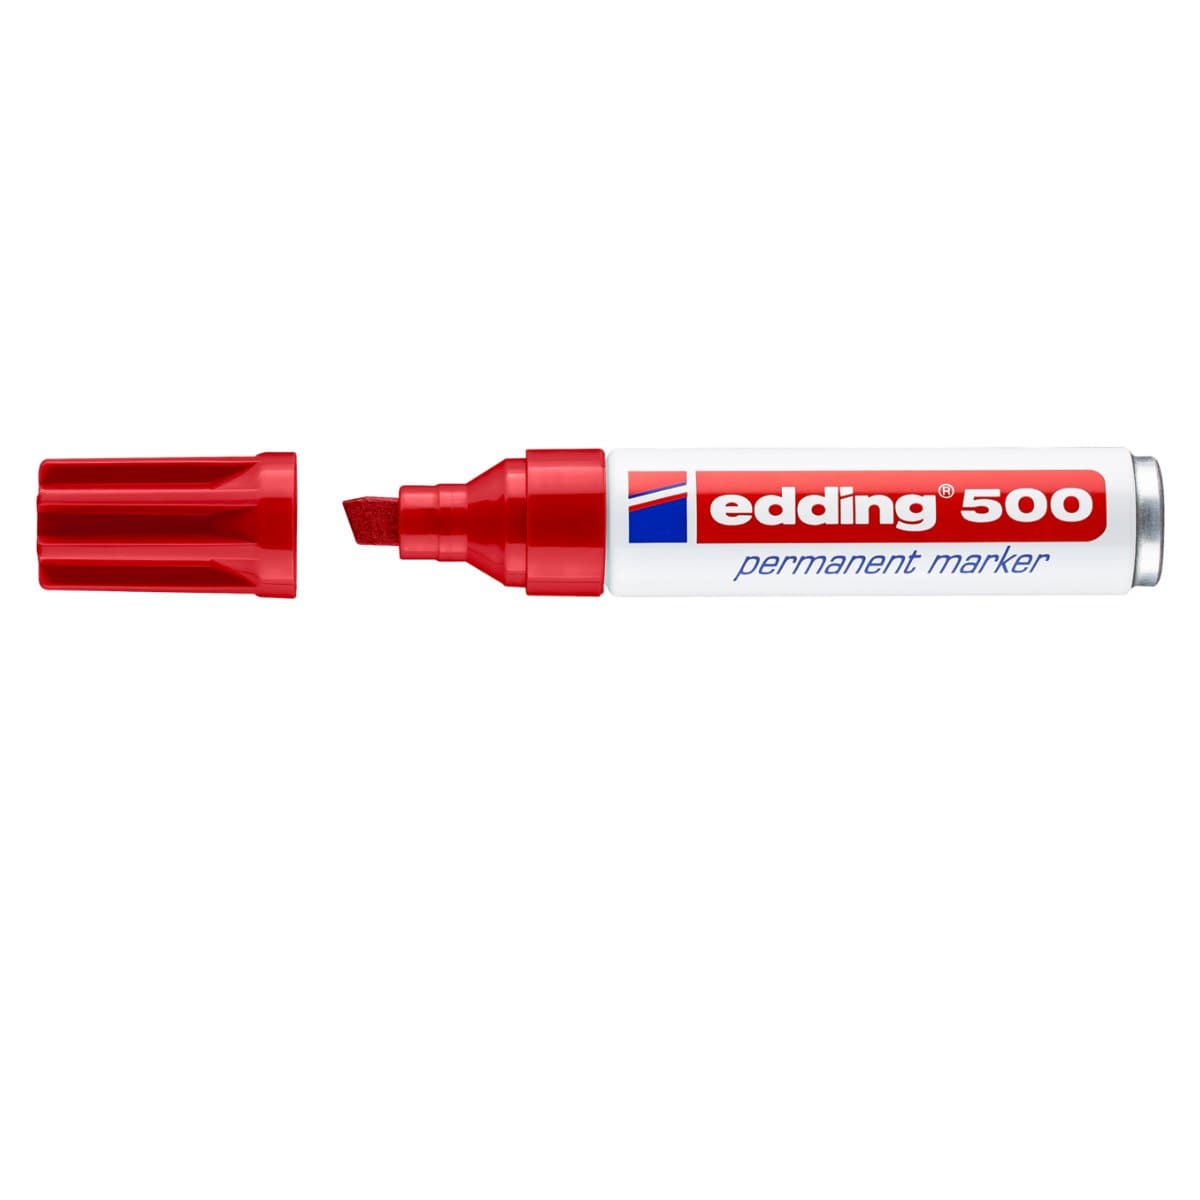 edding 500 Permanent Marker, 2-7mm Chisel Tip, Red